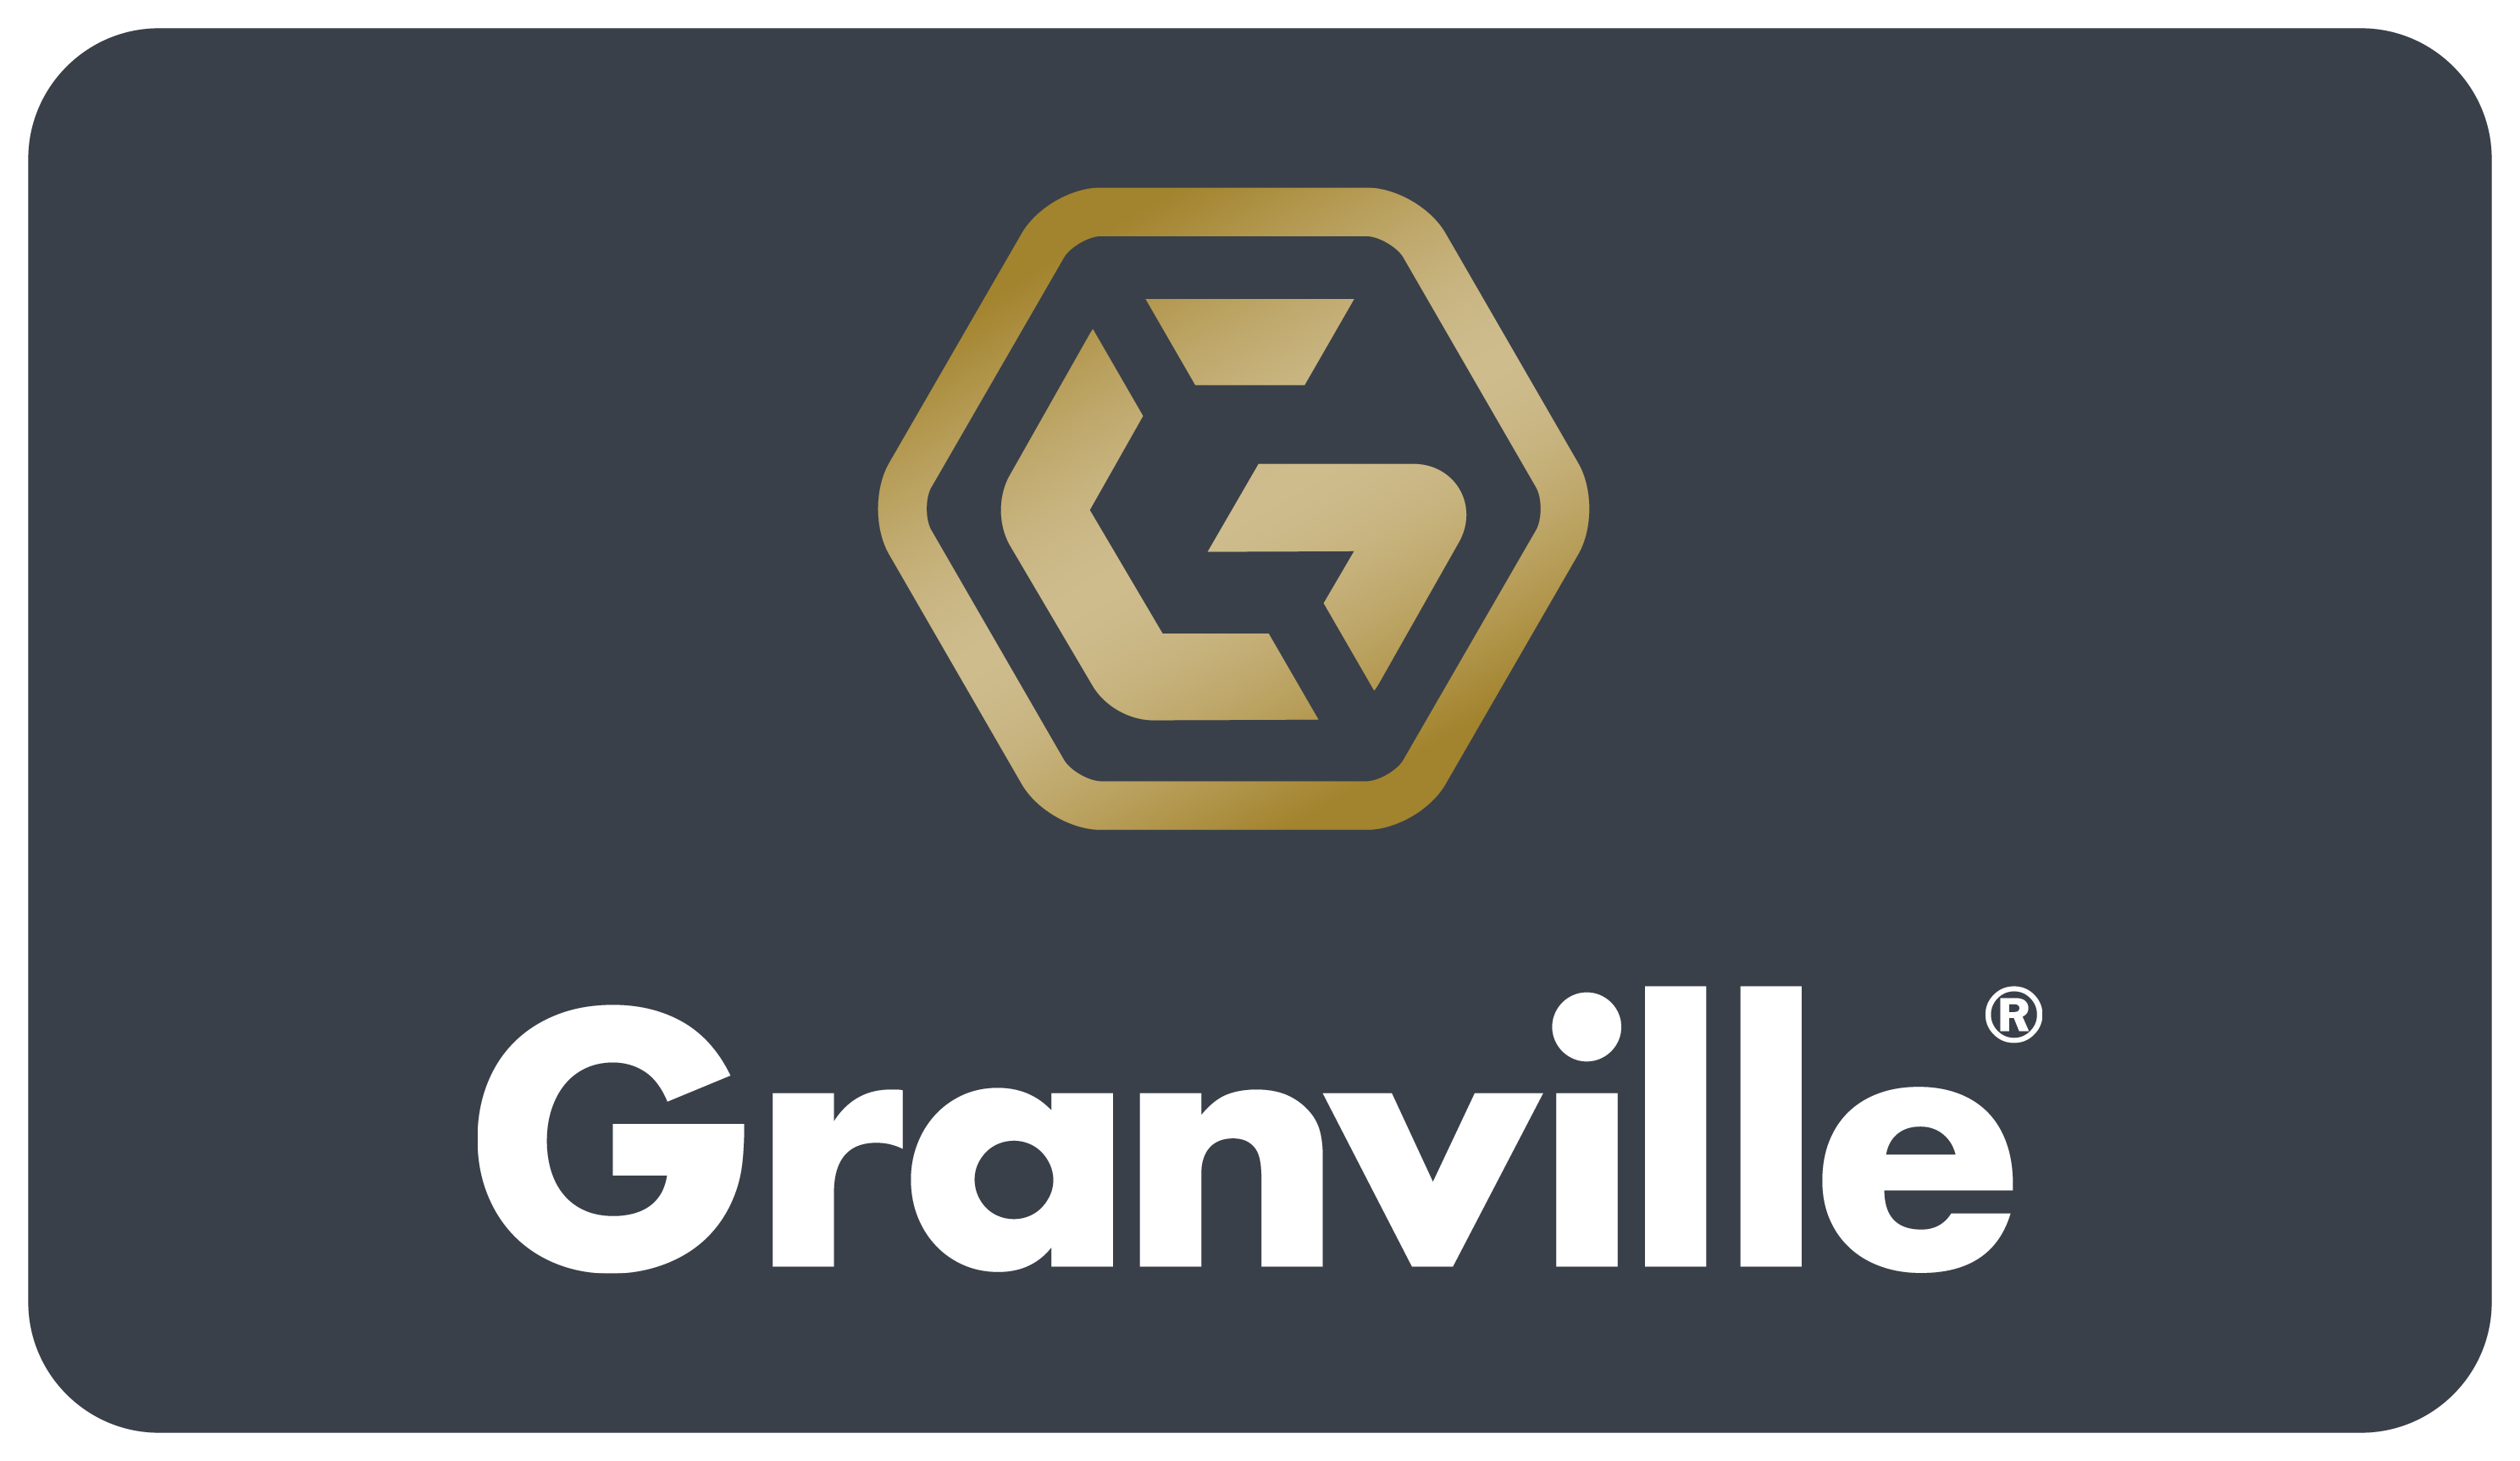 Granville brand logo